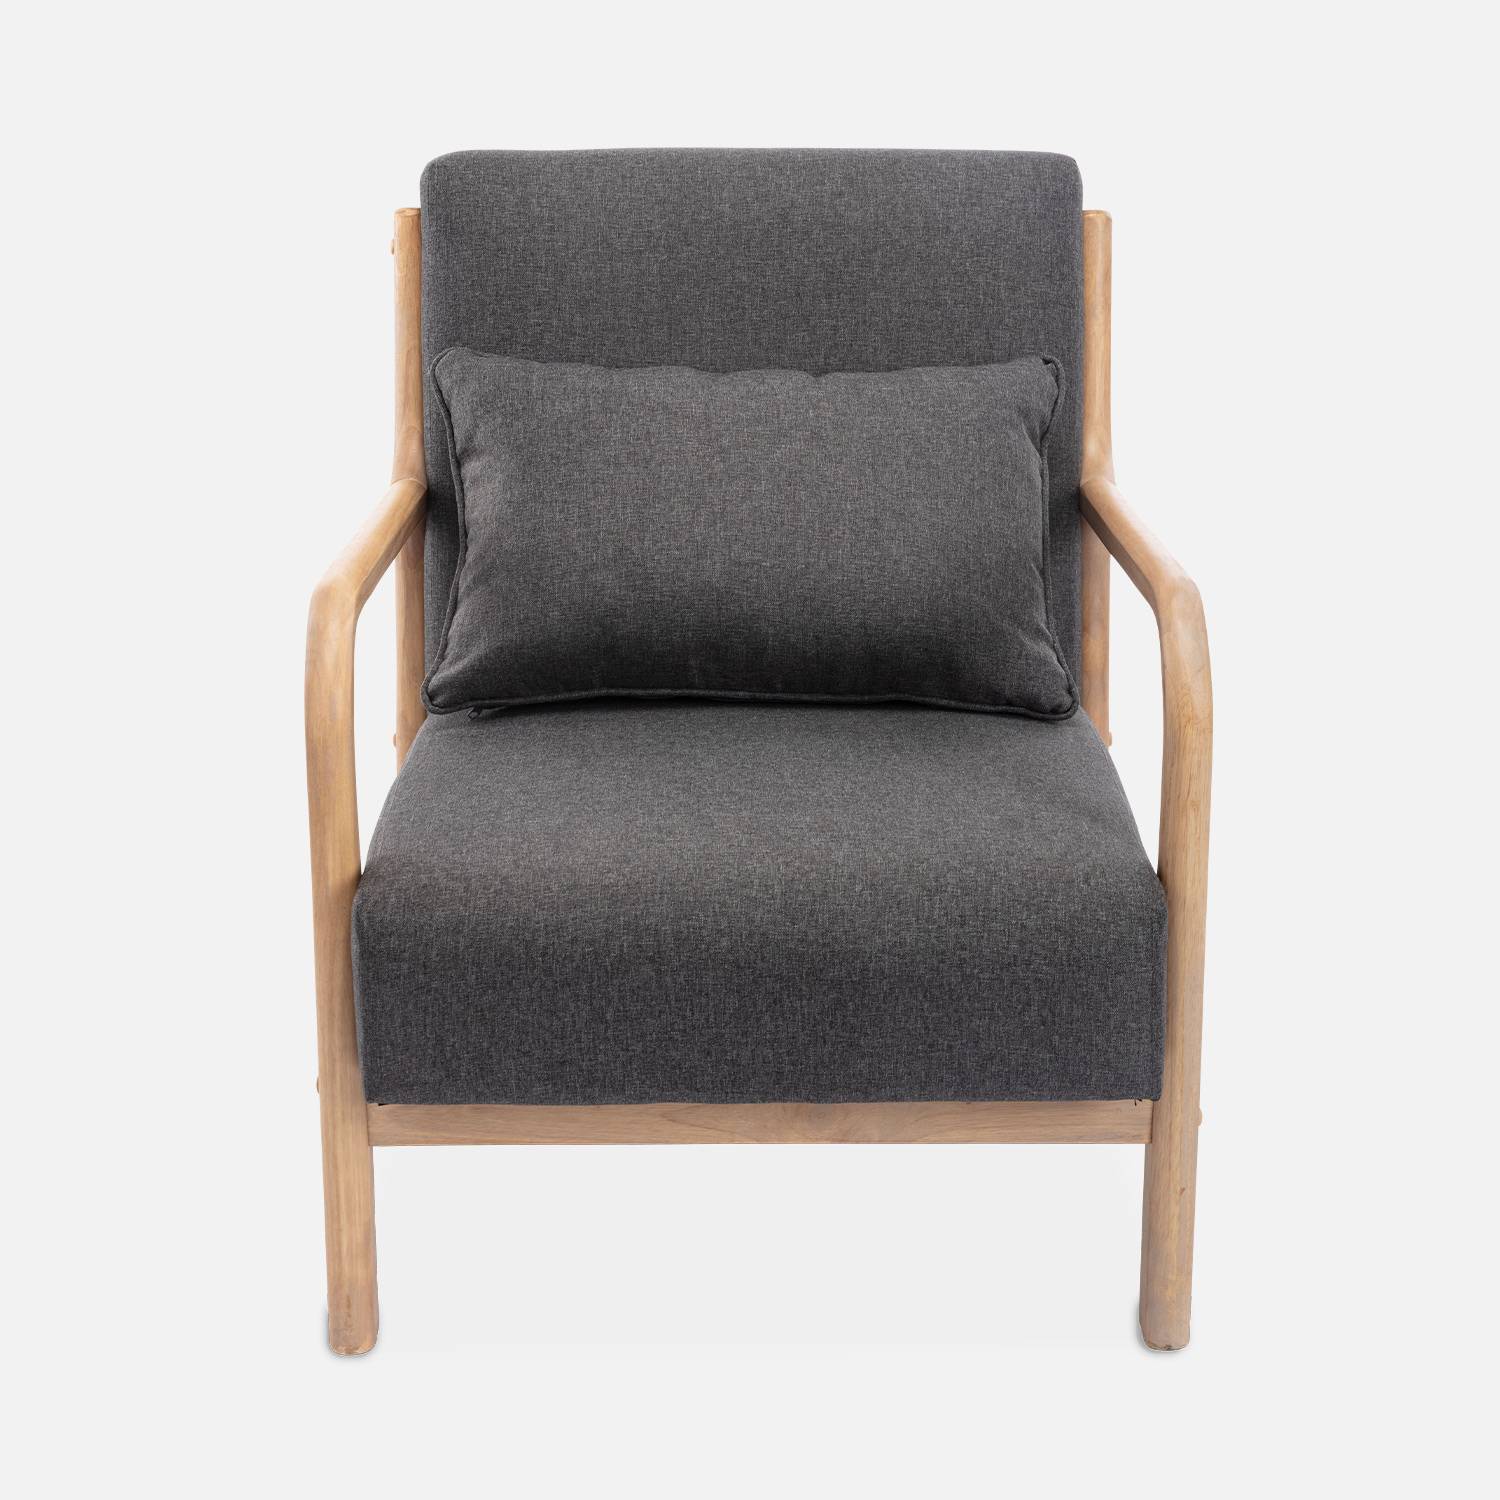 Sillón de diseño de madera y tela, 1 asiento recto fijo, patas de compás escandinavas, armazón de madera maciza, asiento cómodo, gris oscuro Photo5